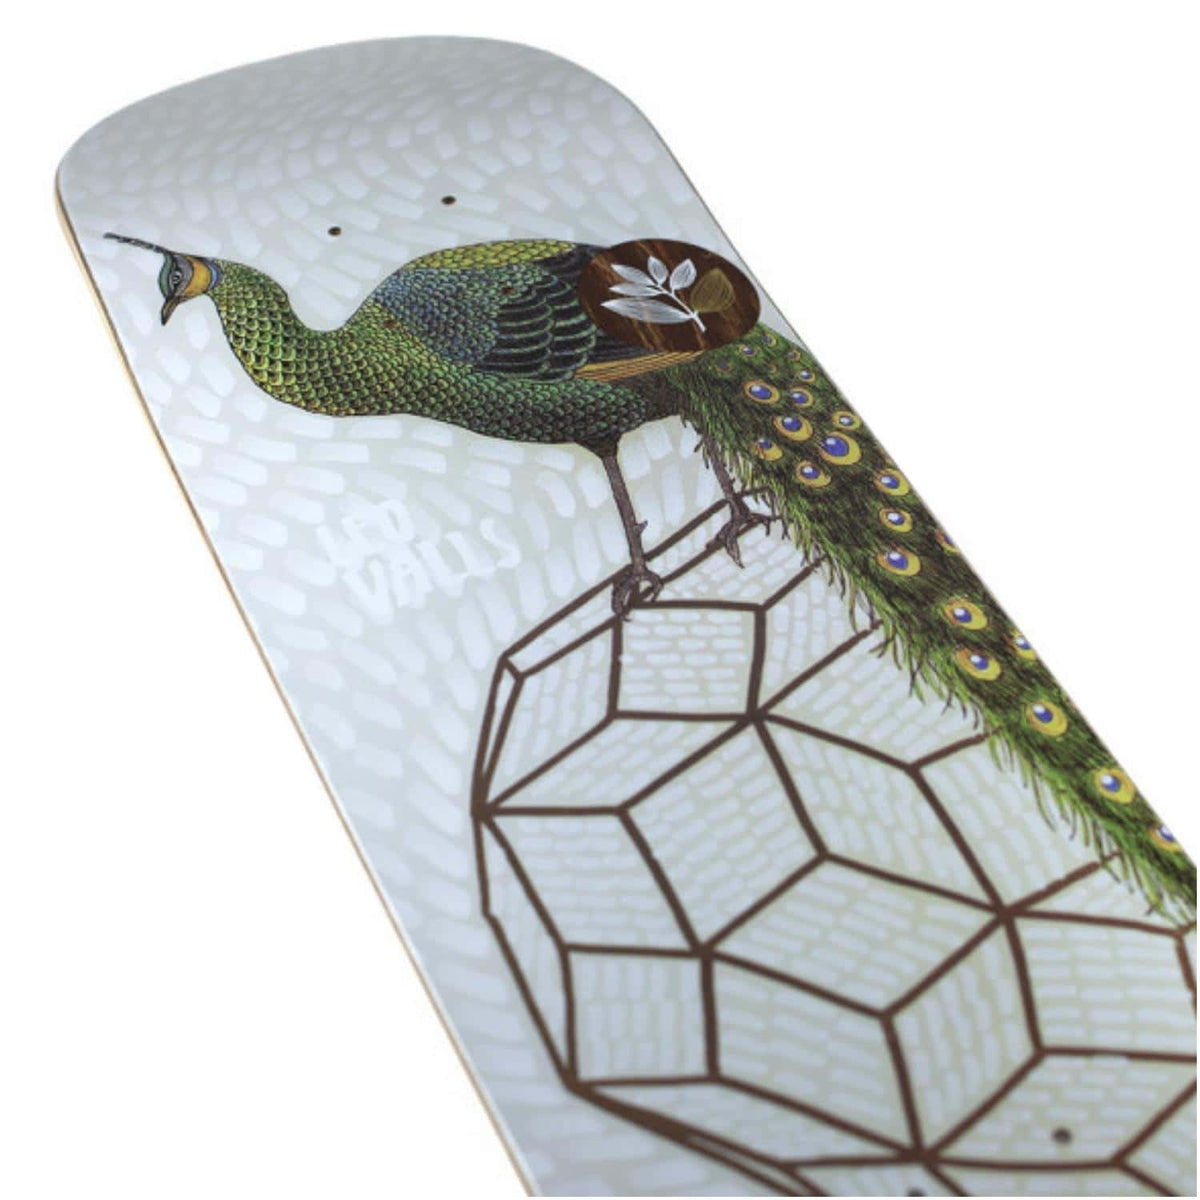 Magenta Leo Valls Zoo Series Skateboard Deck - Multi - Skateboard Deck by Magenta 8.25 inch